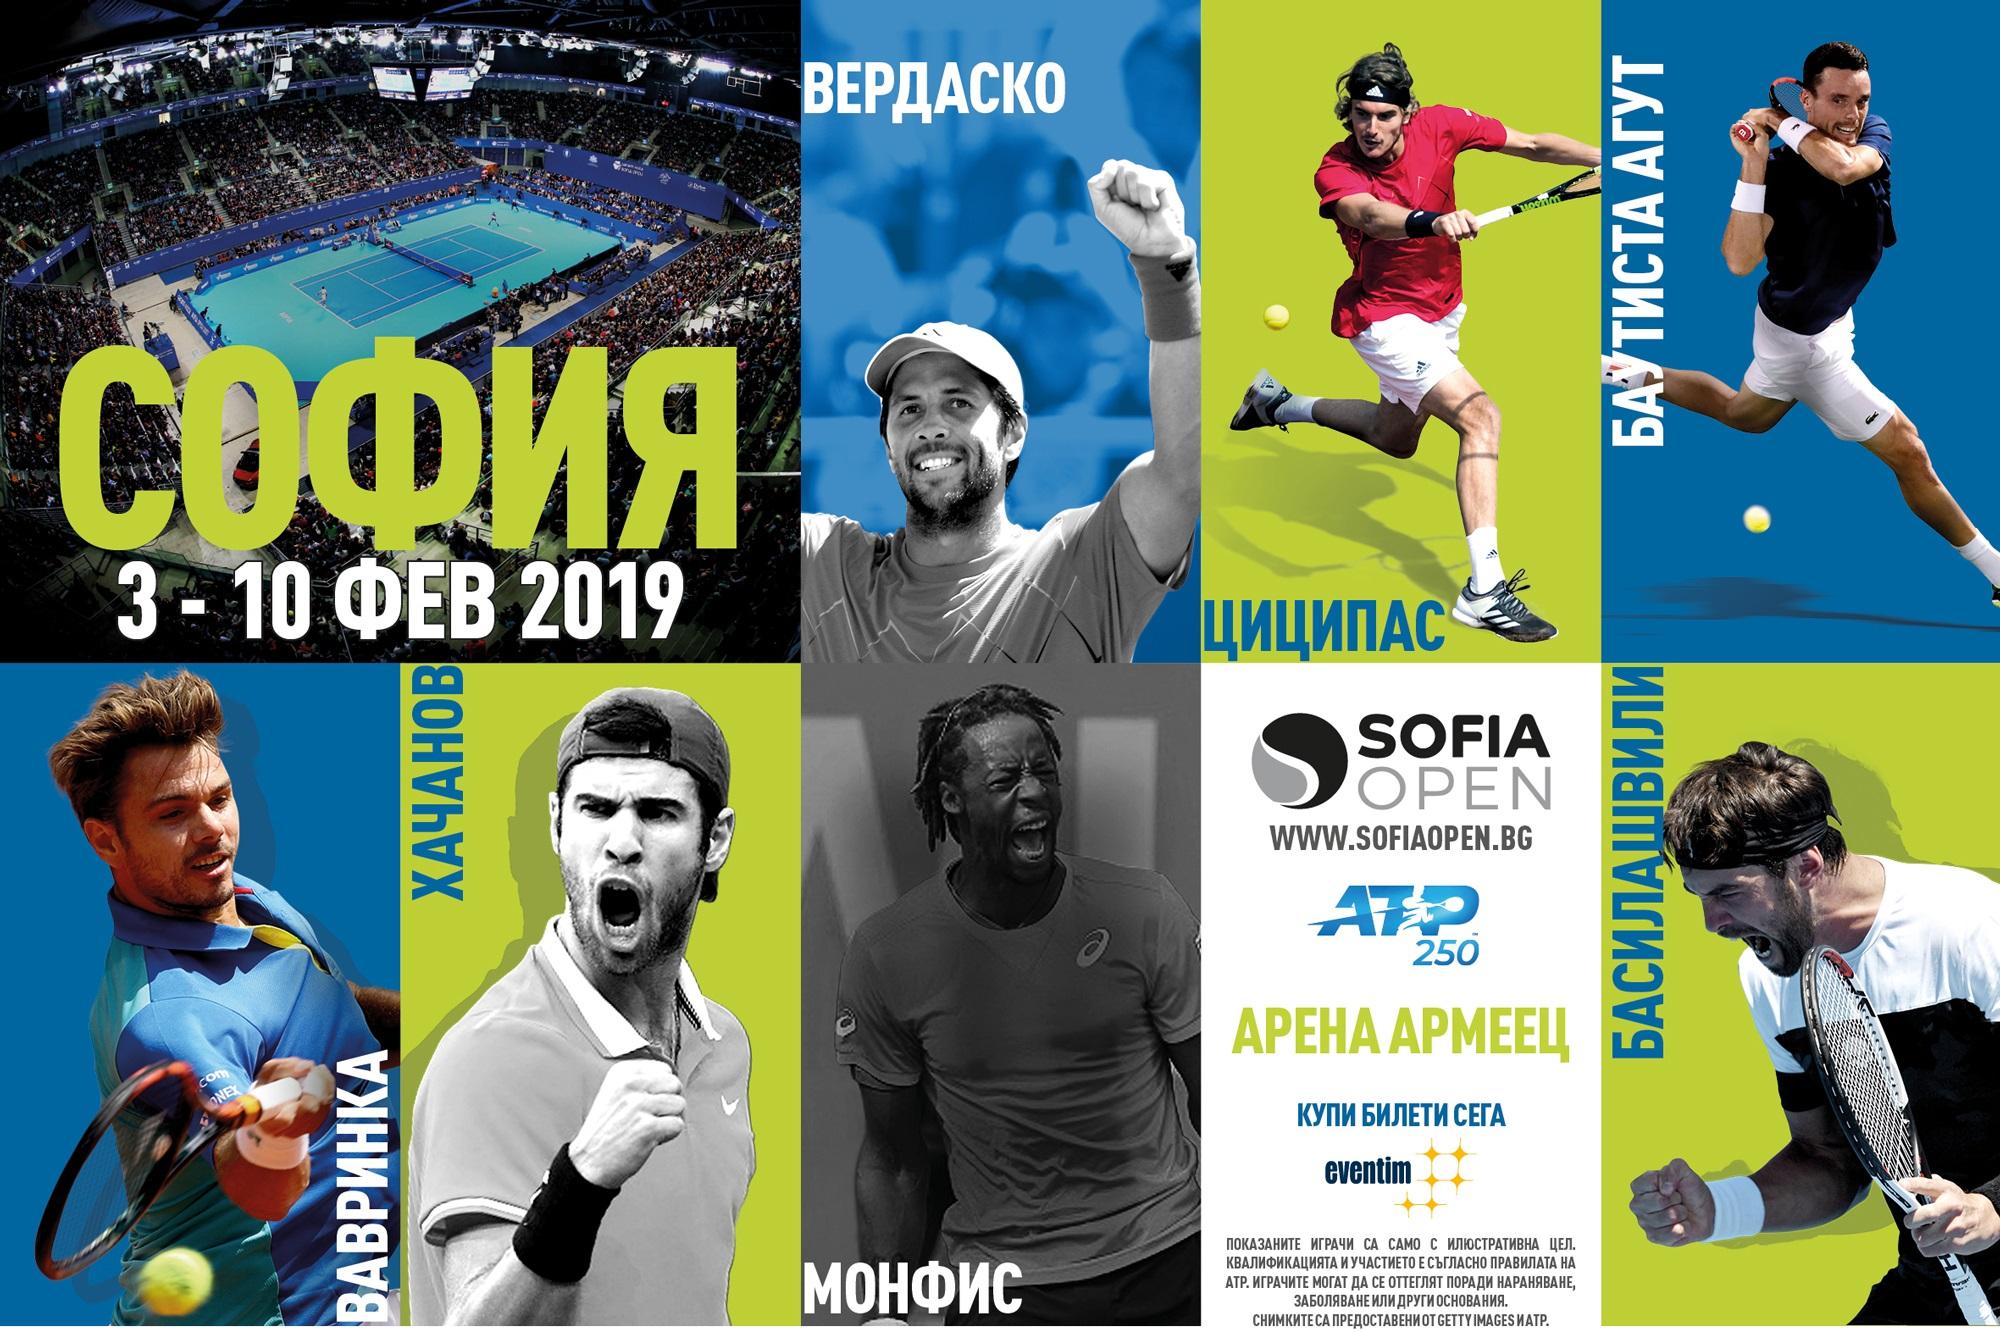 Sofia open 2019